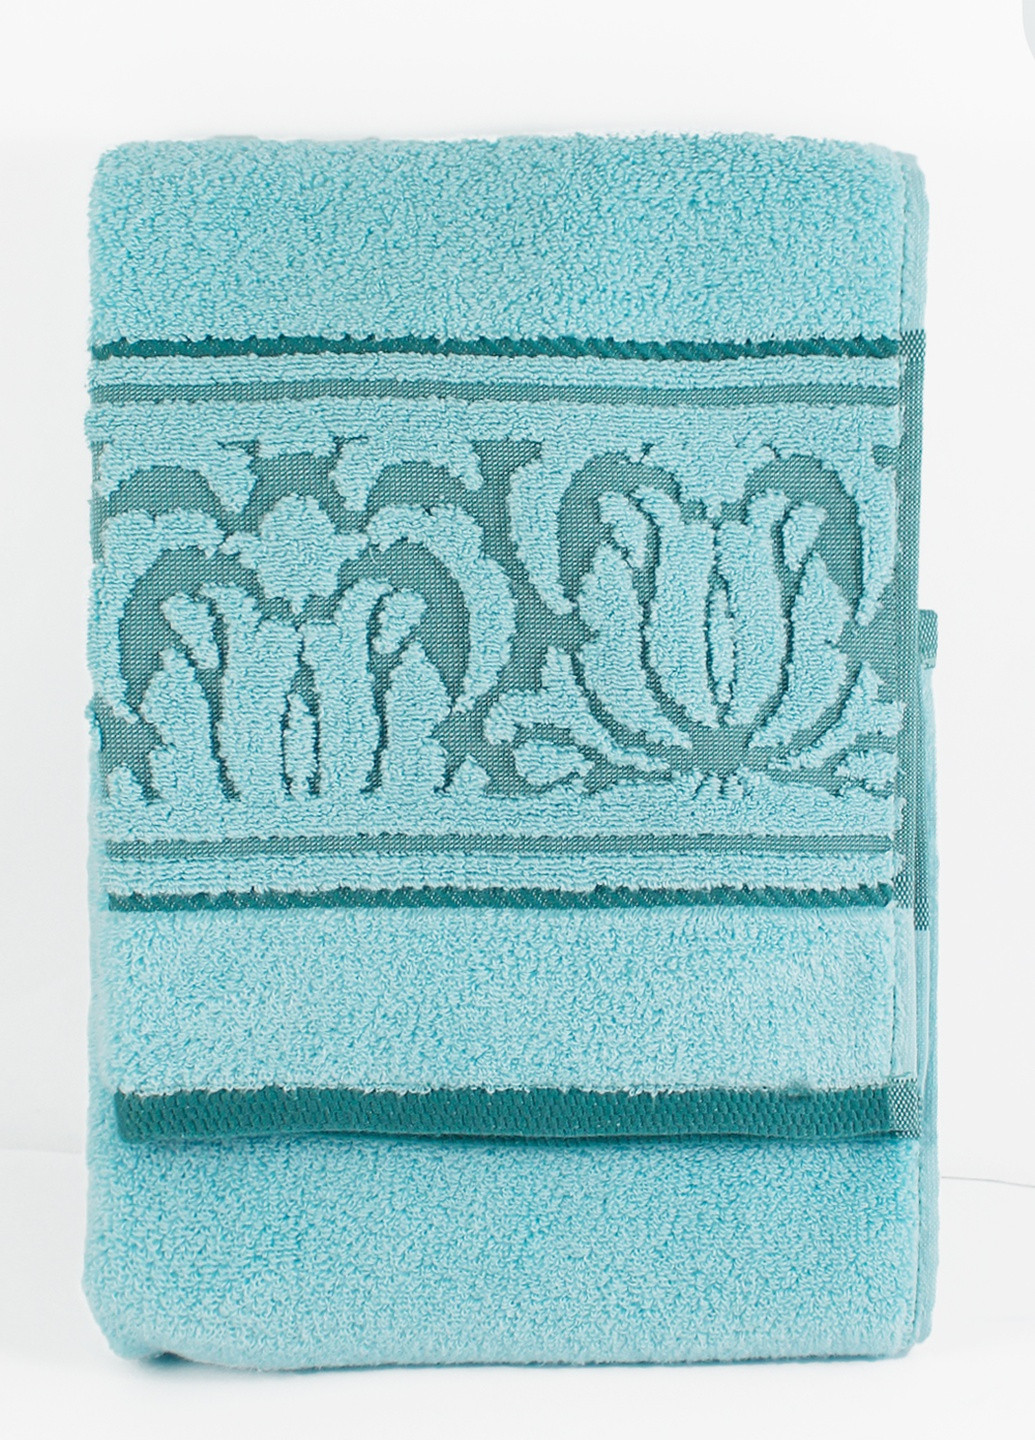 Bulgaria-Tex полотенце махровое bella, microcotton, голубое, размер 80x160 cm голубой производство - Болгария